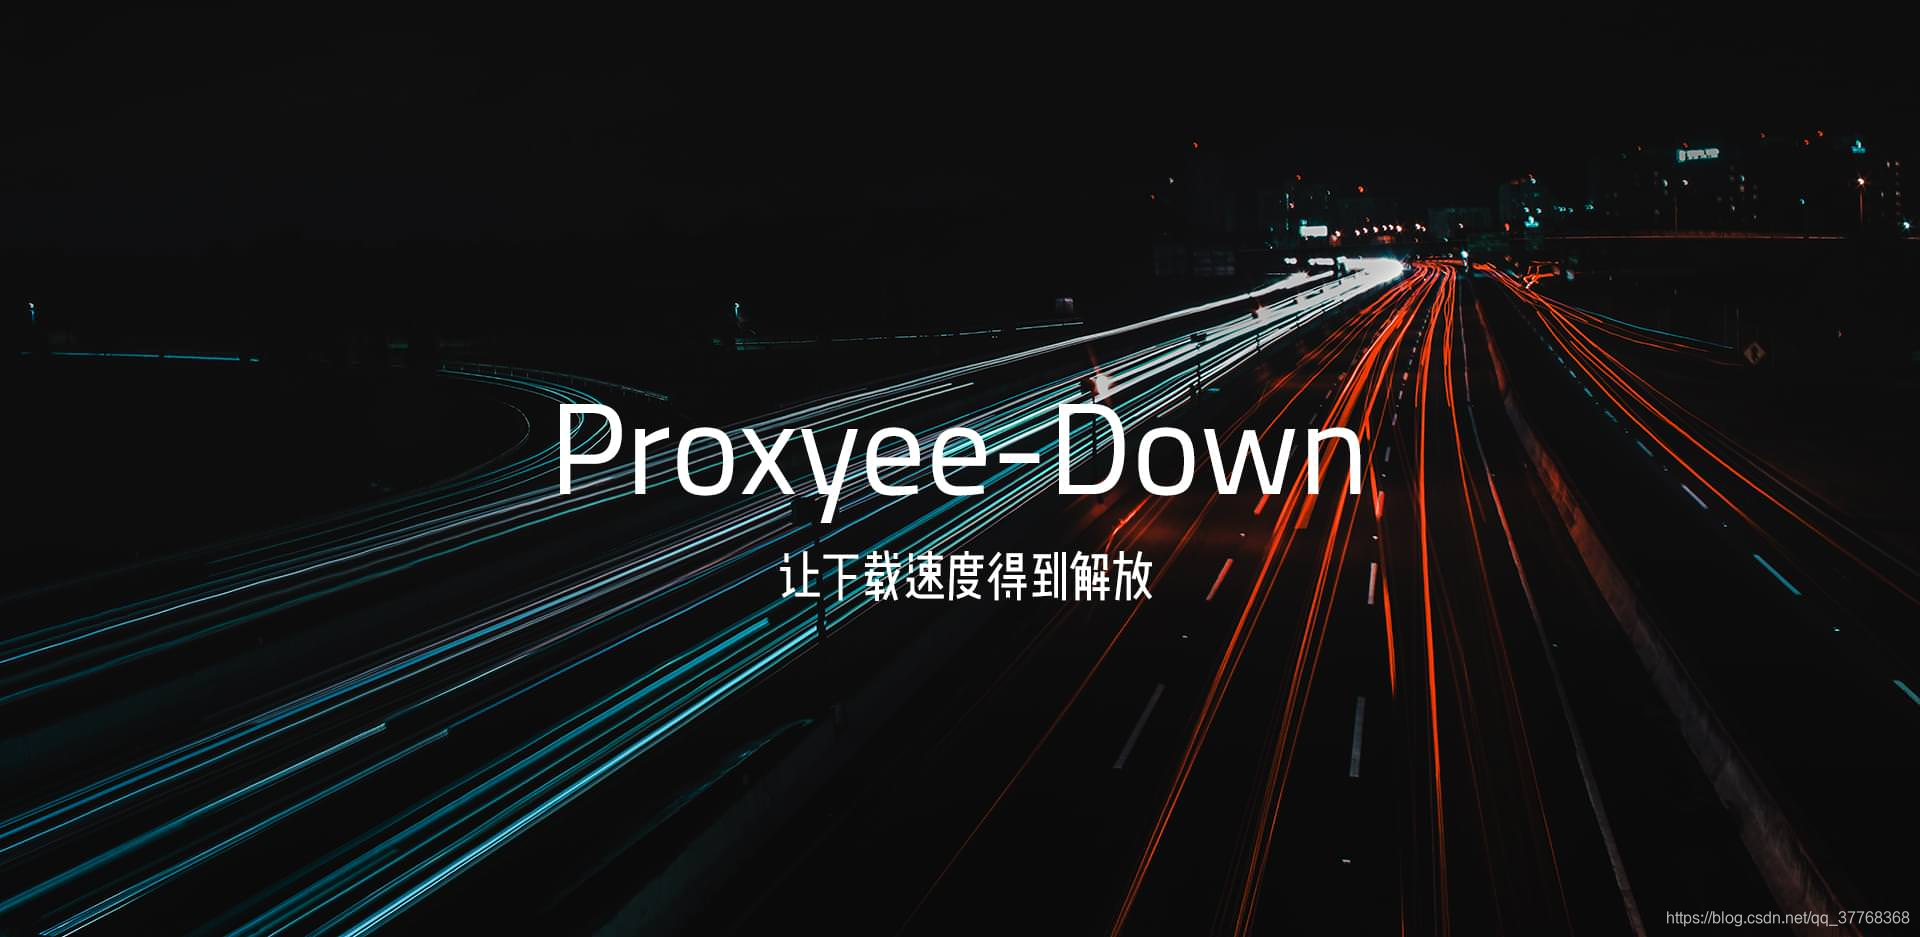 proxyee-down